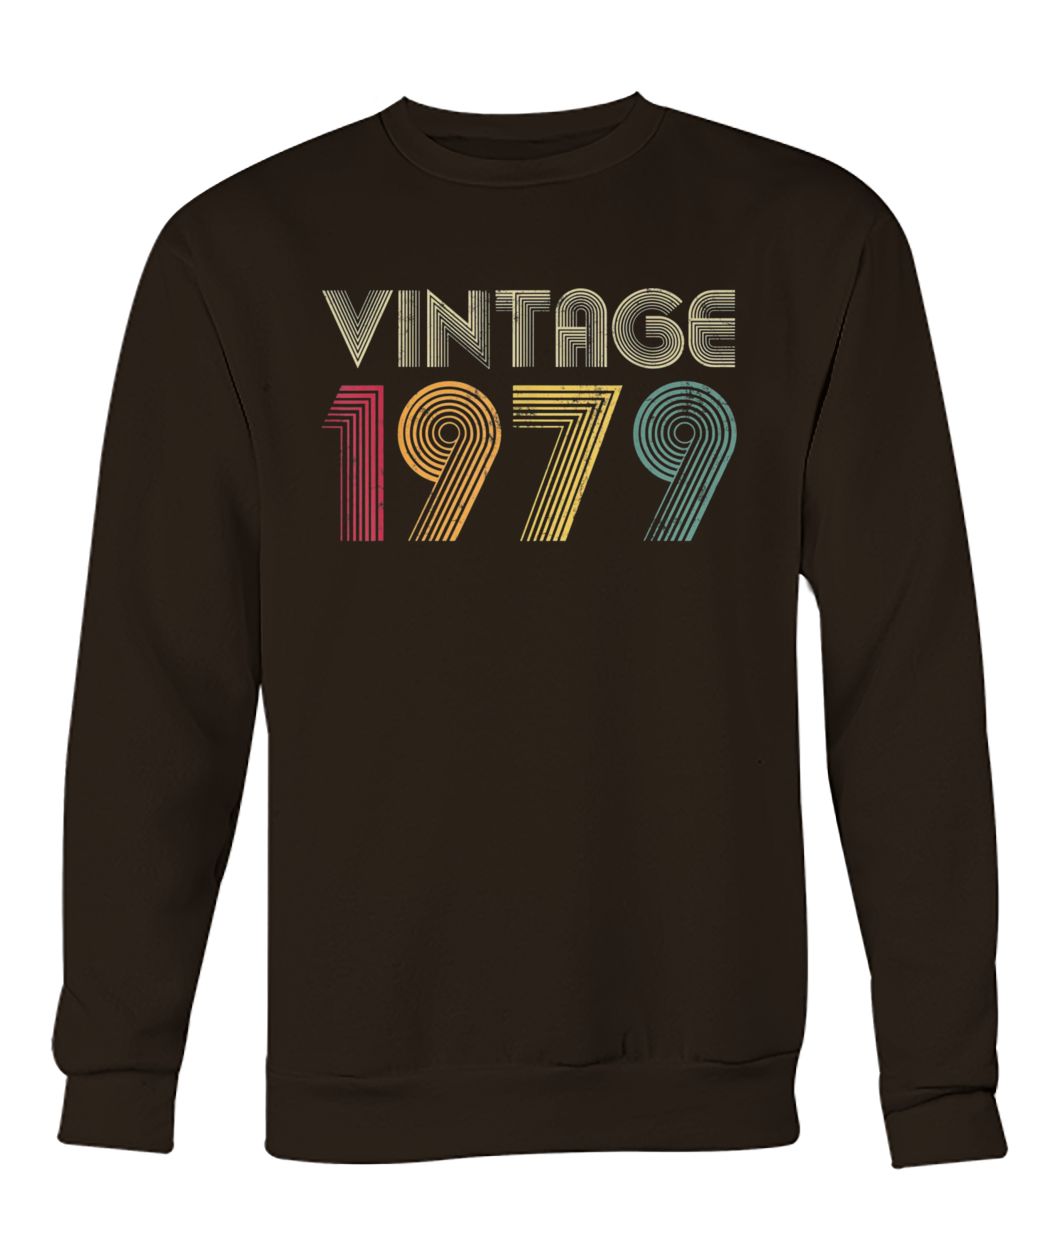 40th birthday vintage 1979 crew neck sweatshirt